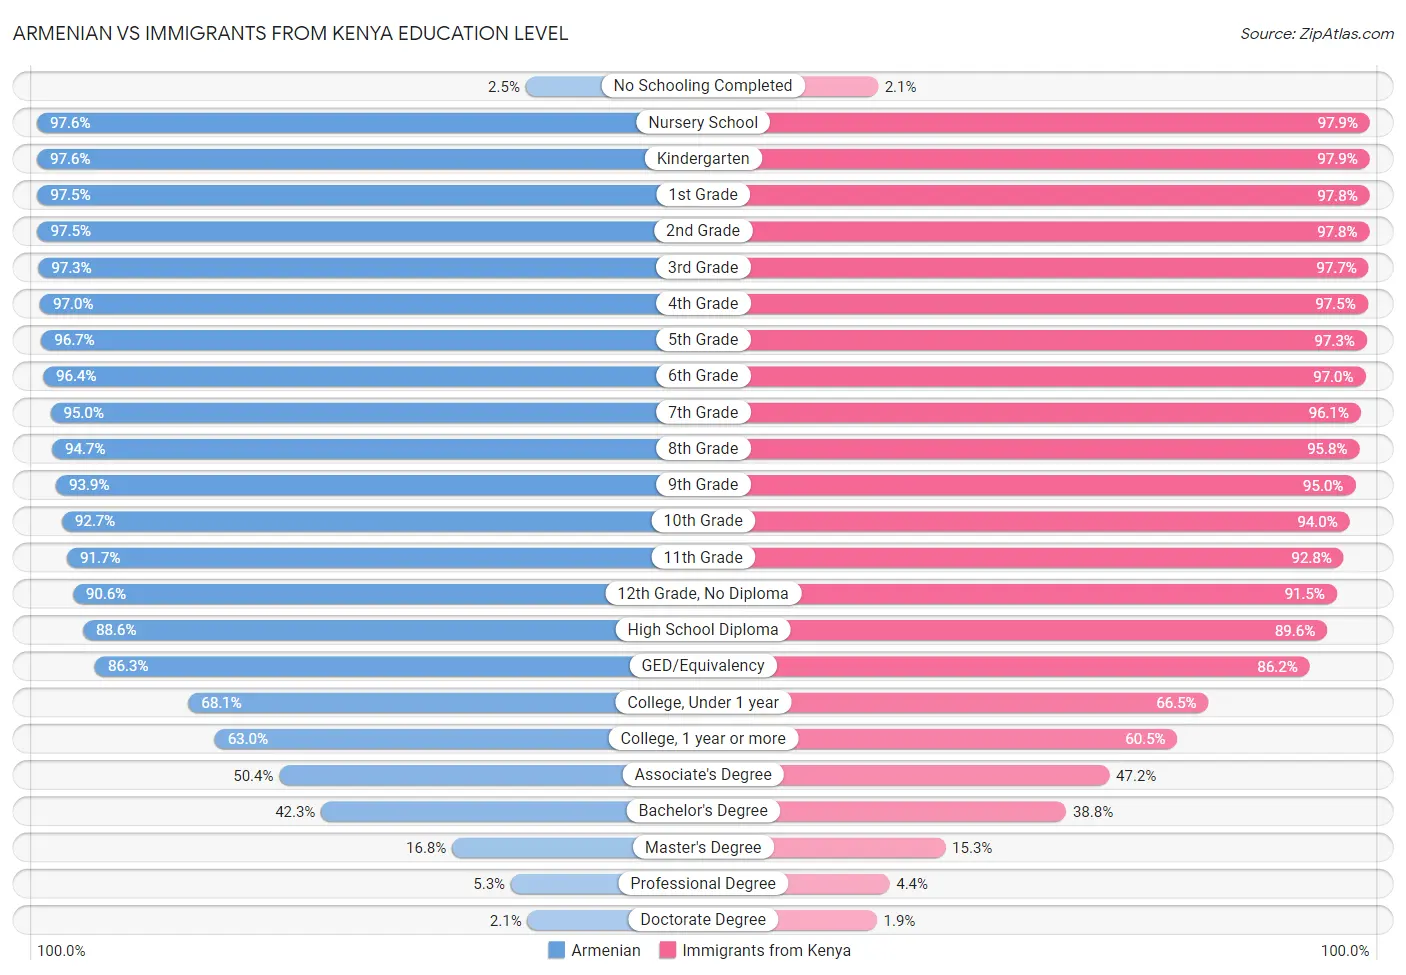 Armenian vs Immigrants from Kenya Education Level